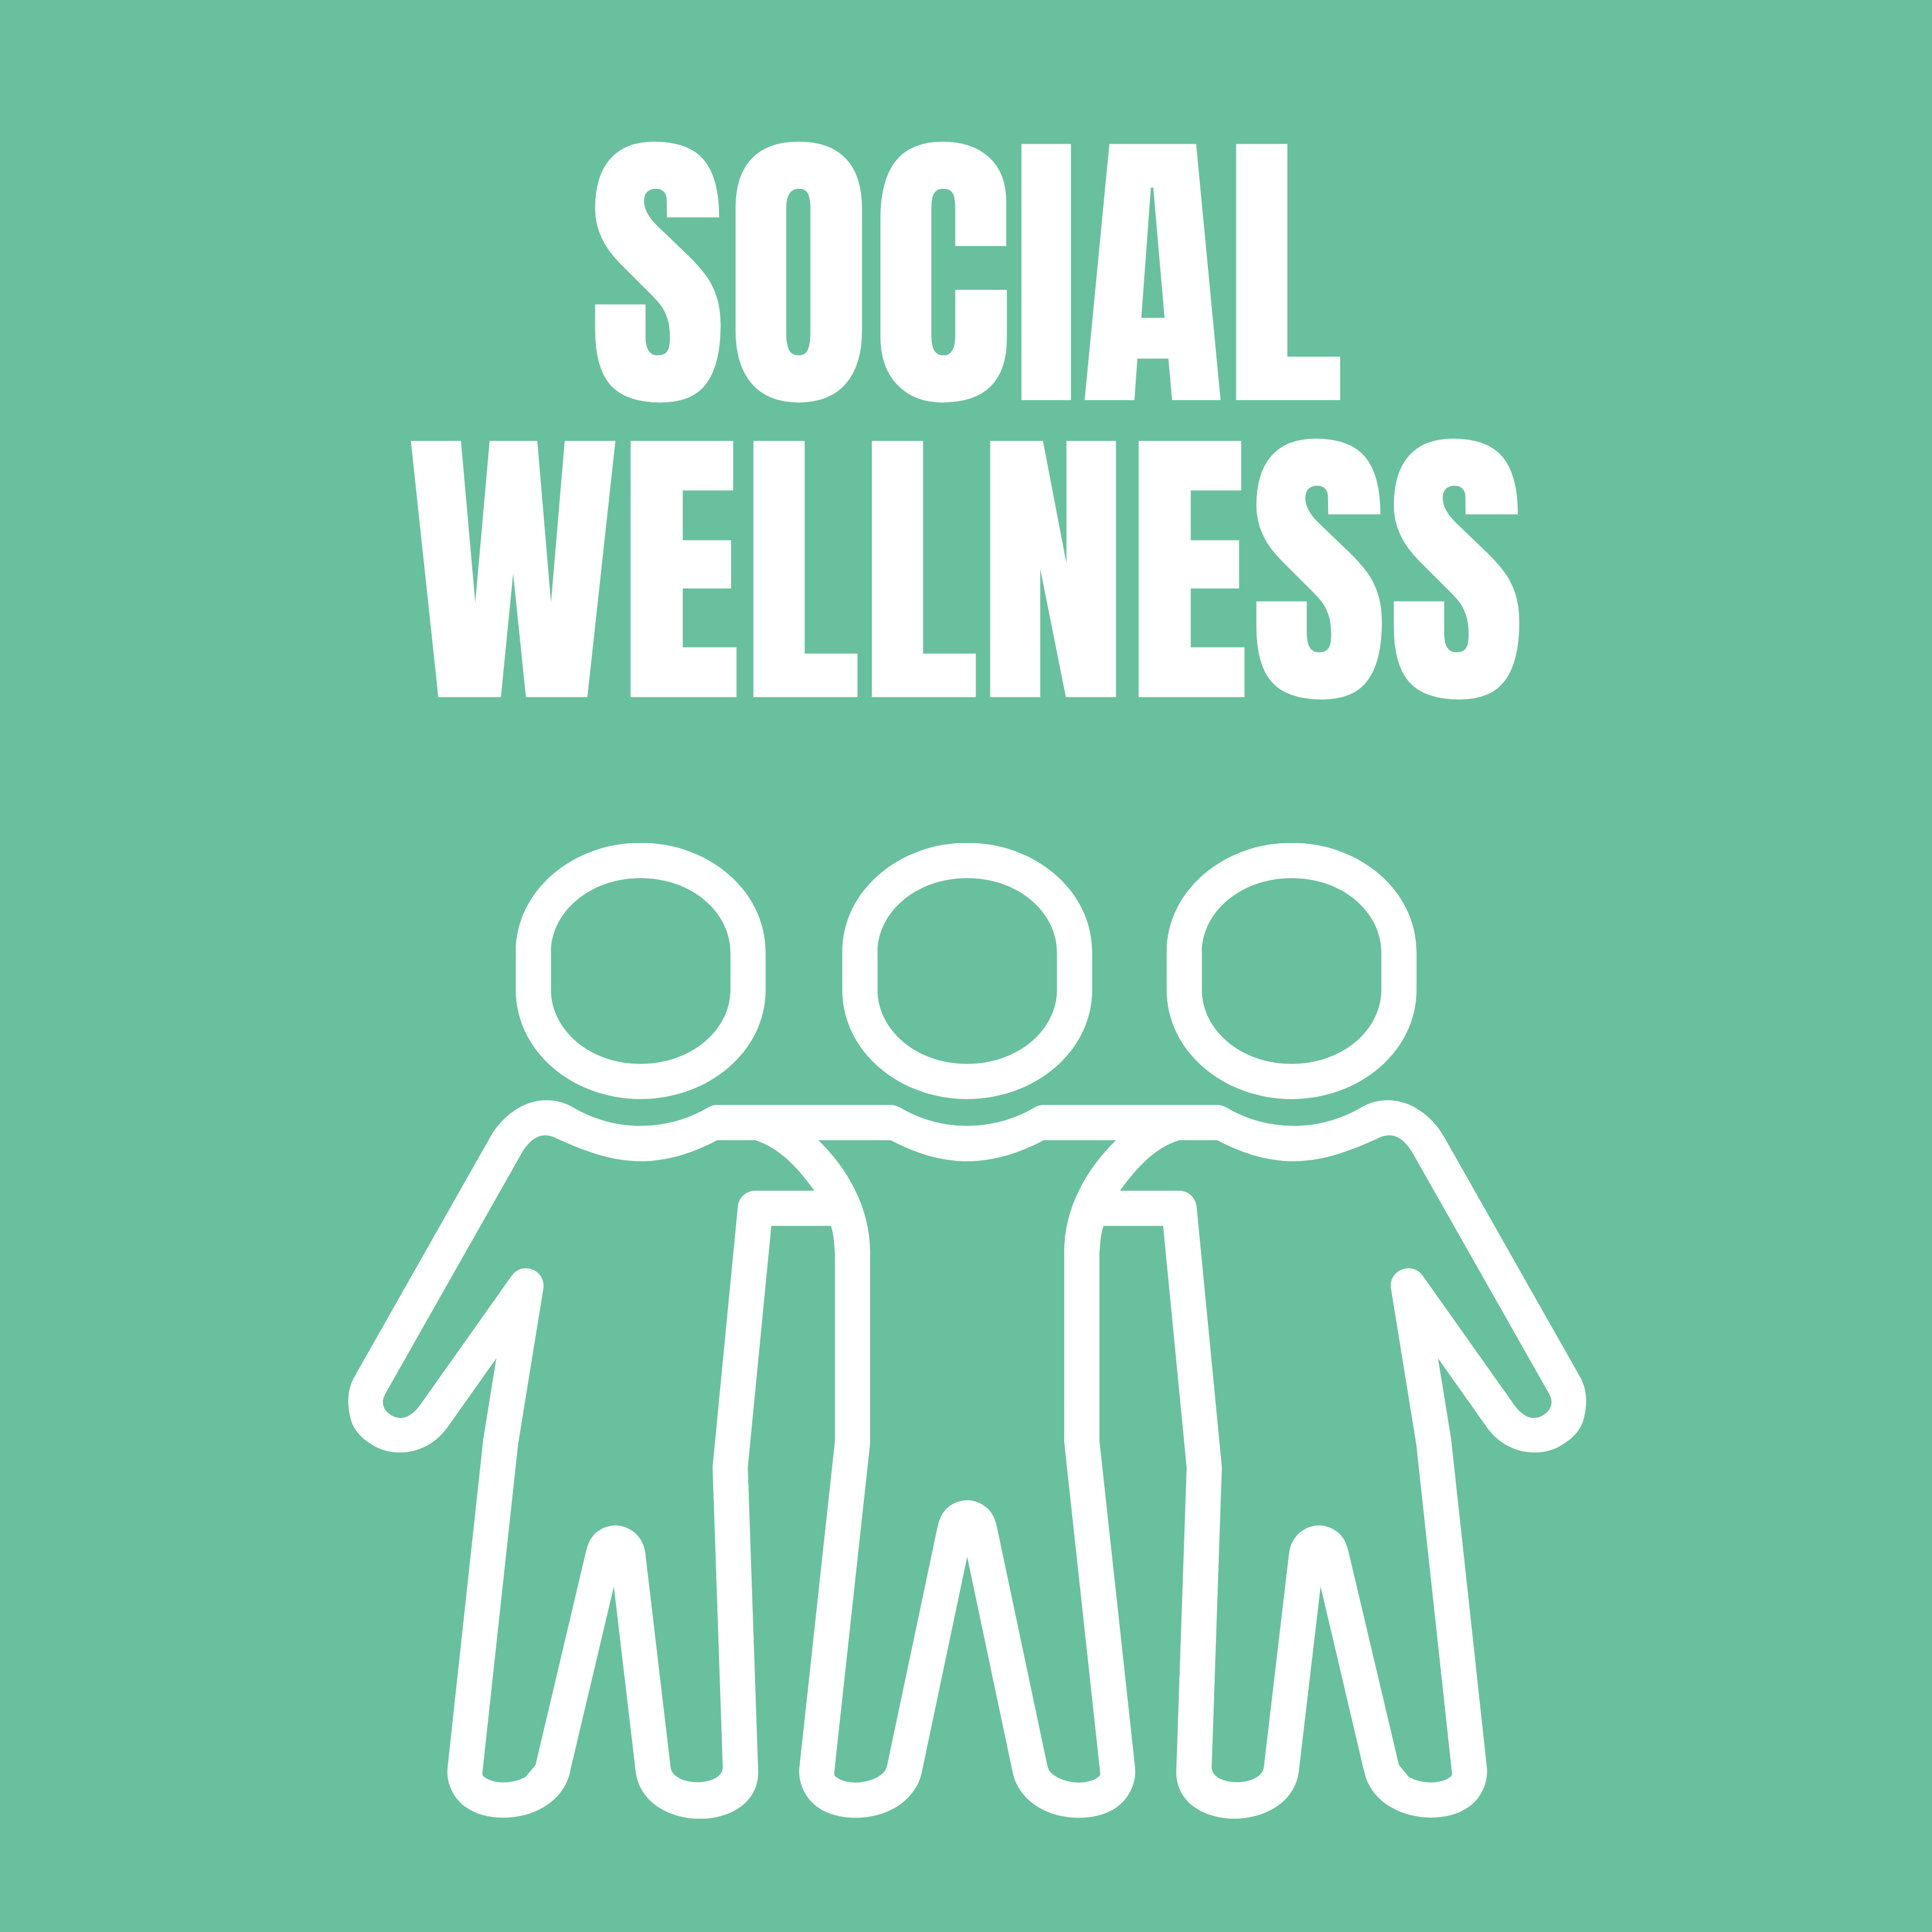 Social wellness icon